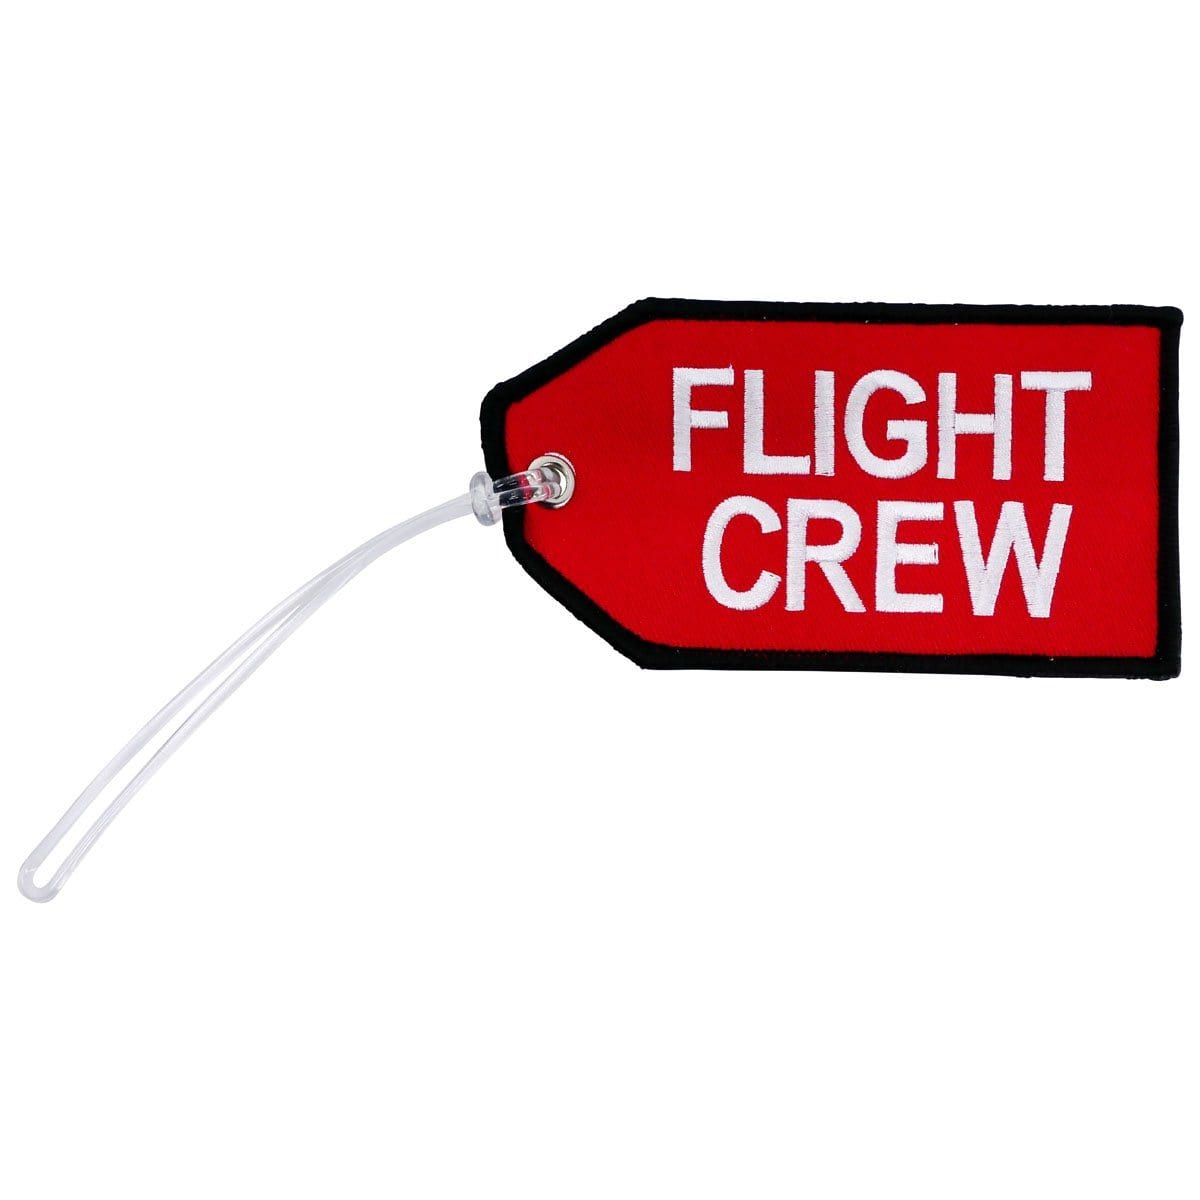 Pilot Toys Flight Crew Red Bag Tag